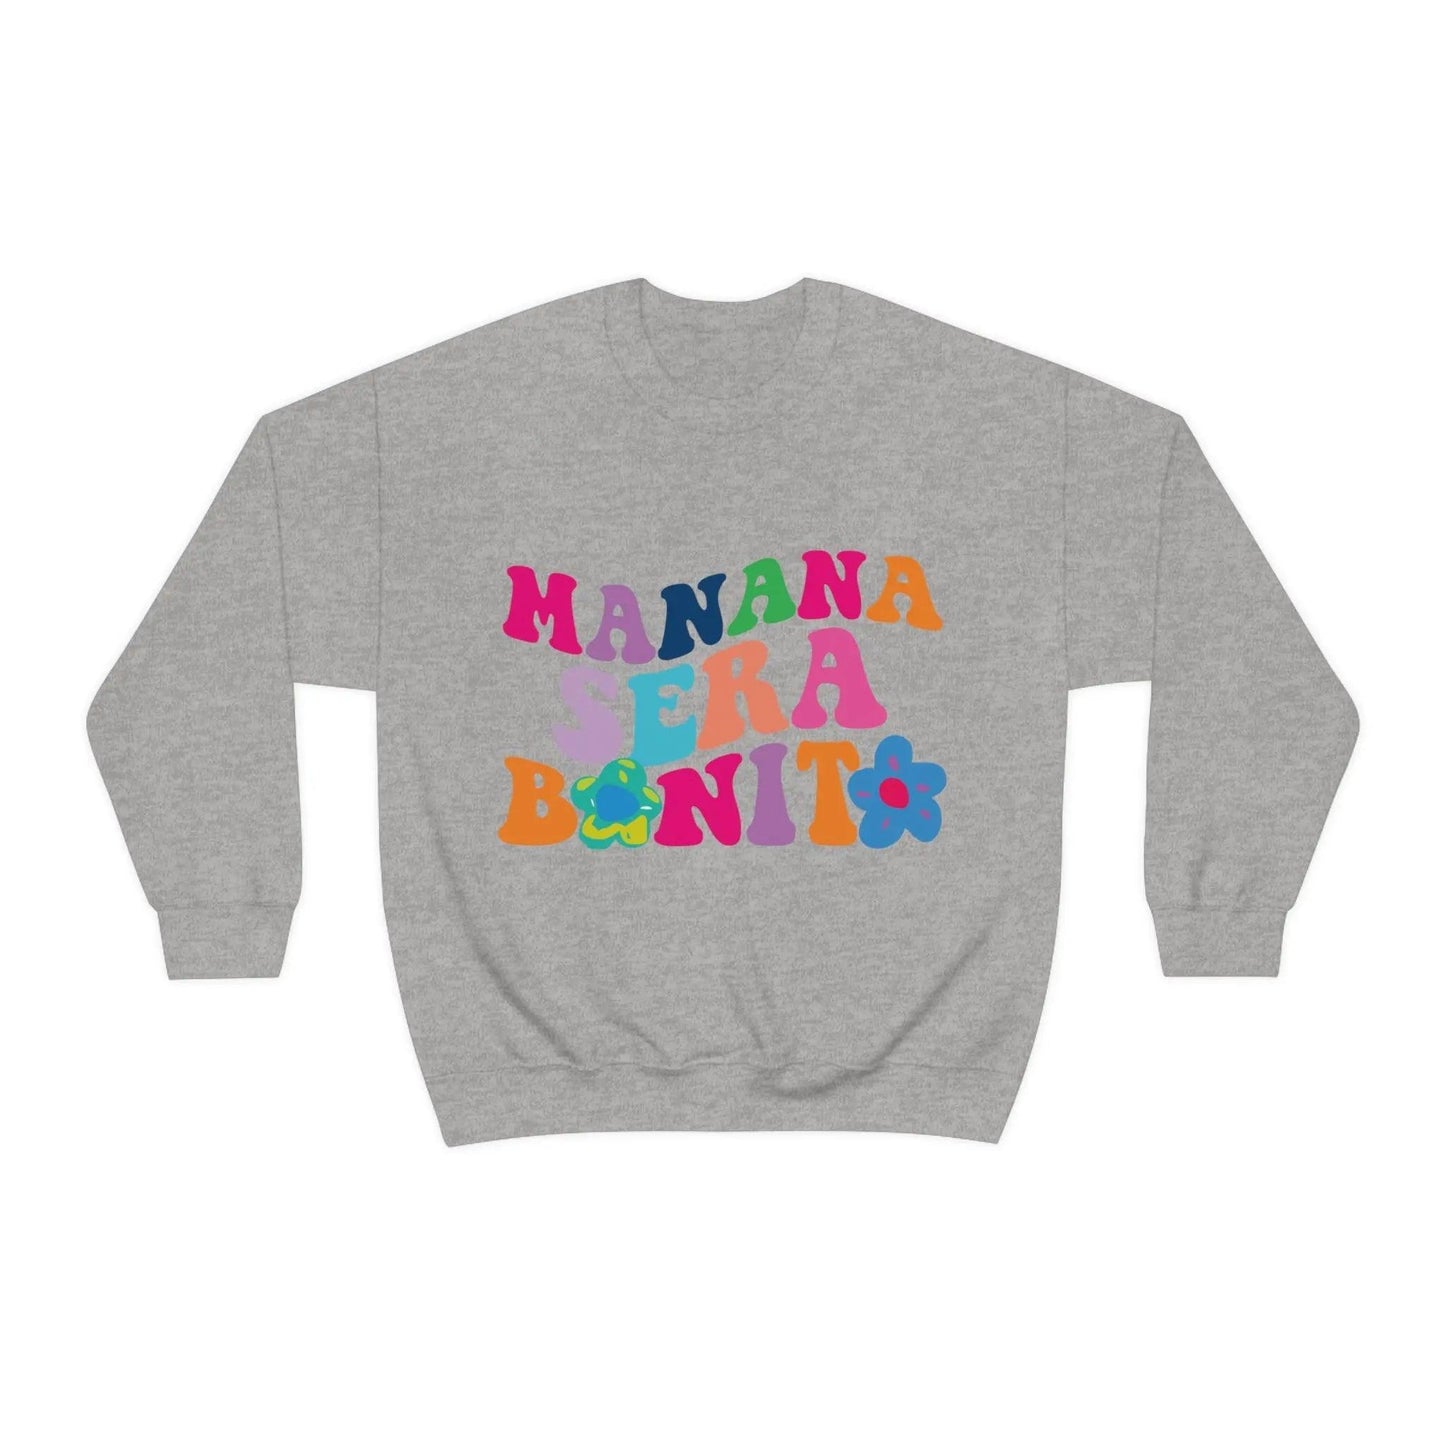 Manana sera Bonito - Crewneck Sweatshirt Printify